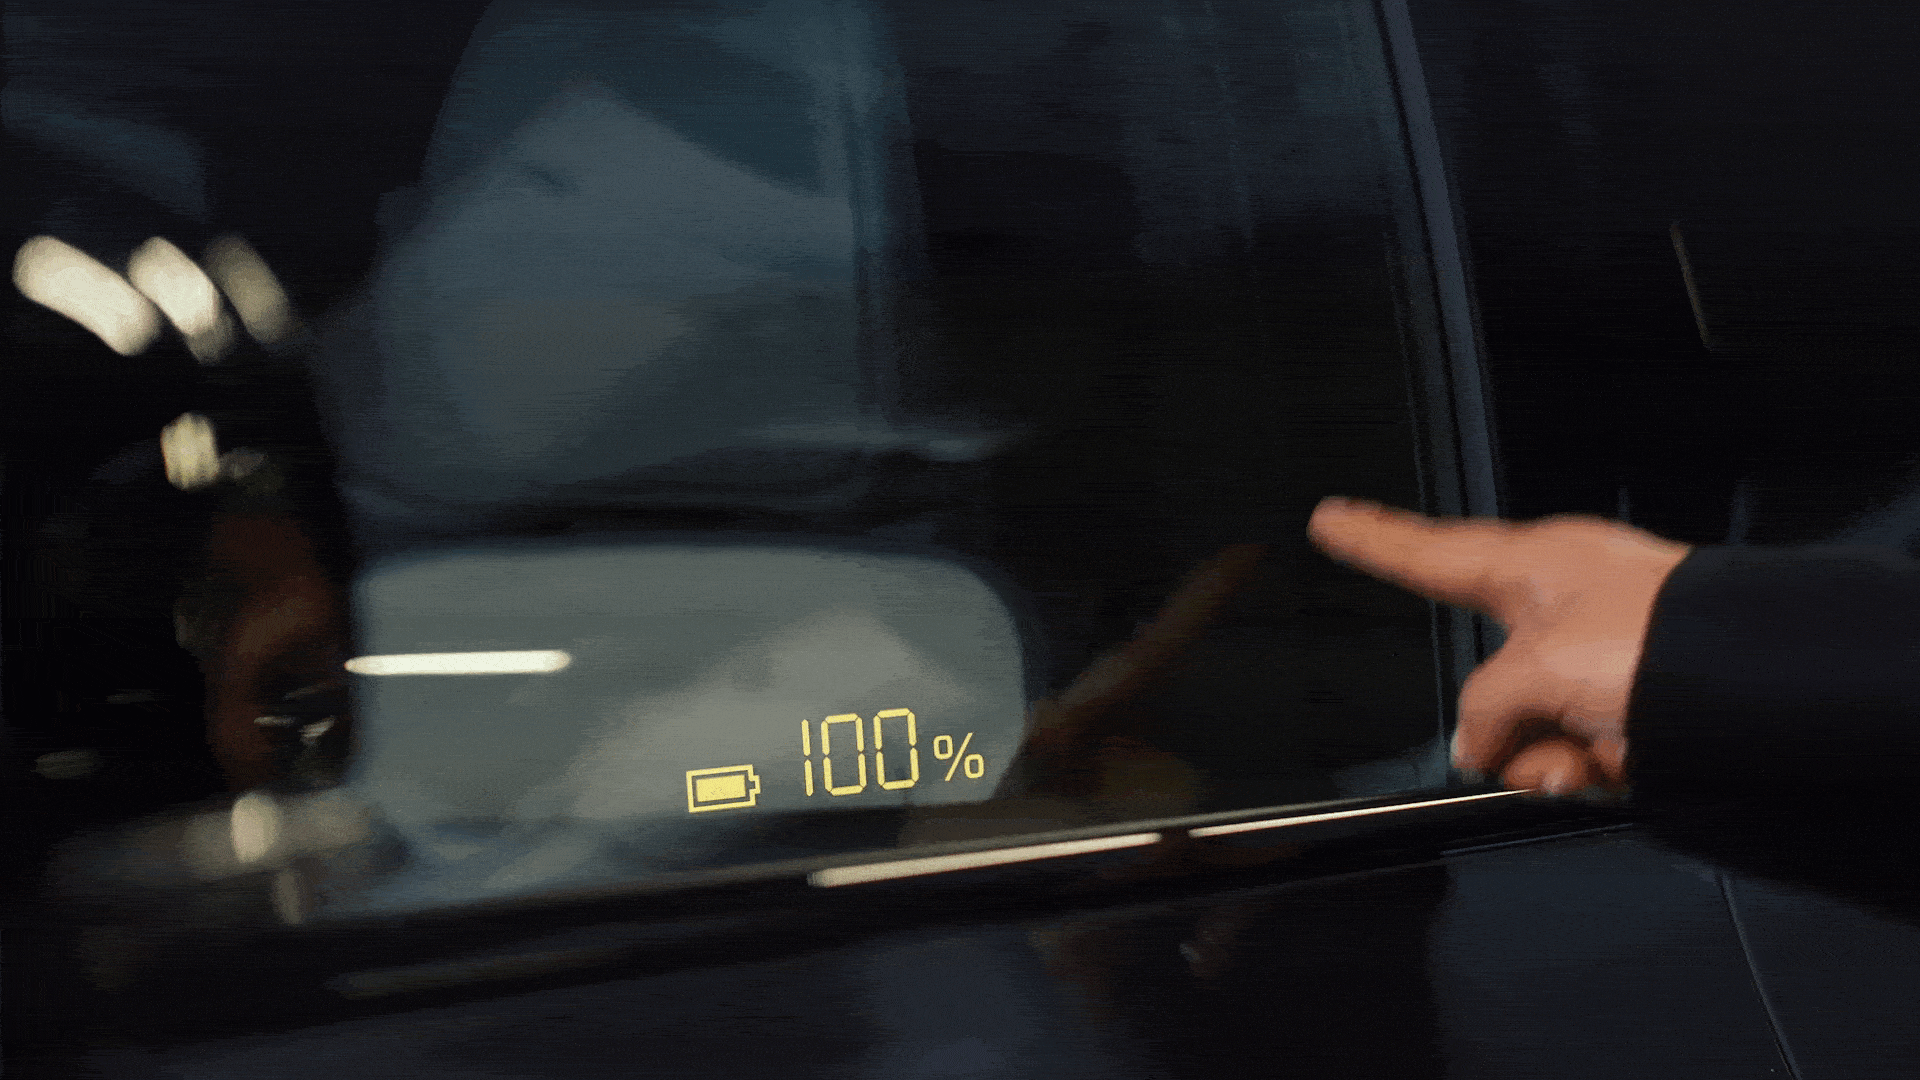 LUMINEQ in-glass display to unlock cars